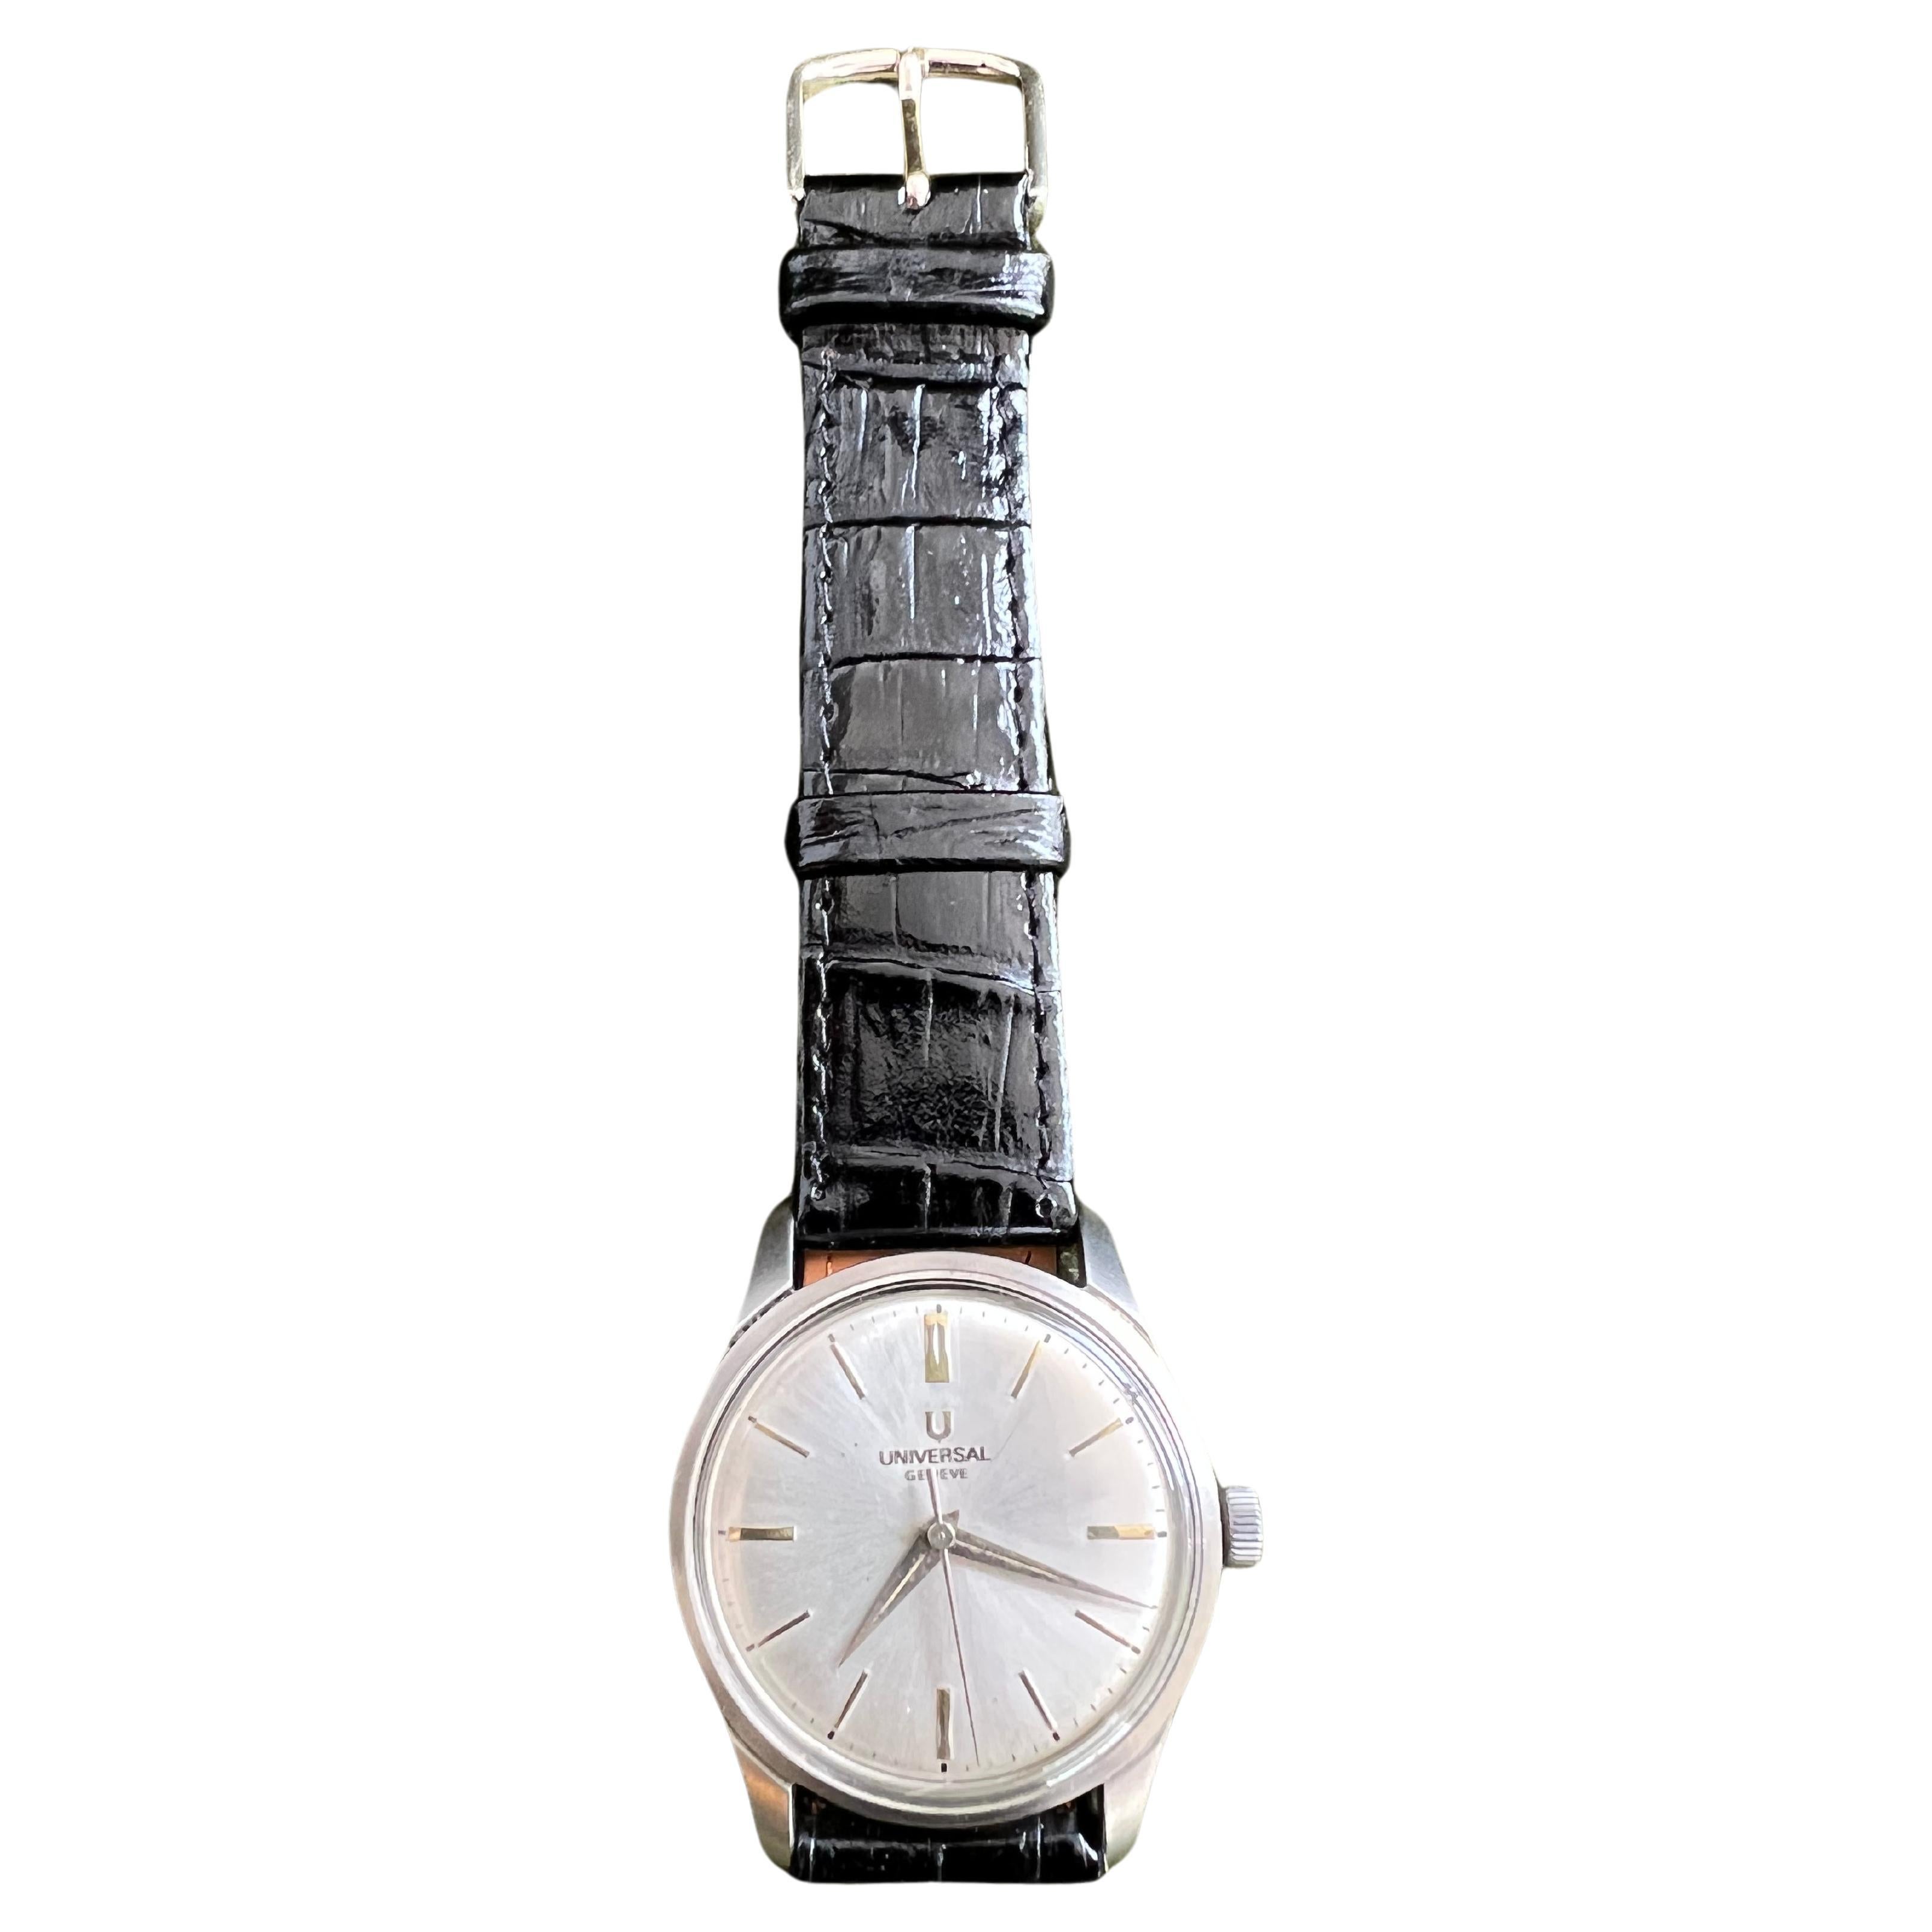  Vintage & Rare Universal Geneva White Face Circa 1960 Classic Dress Watch For Sale